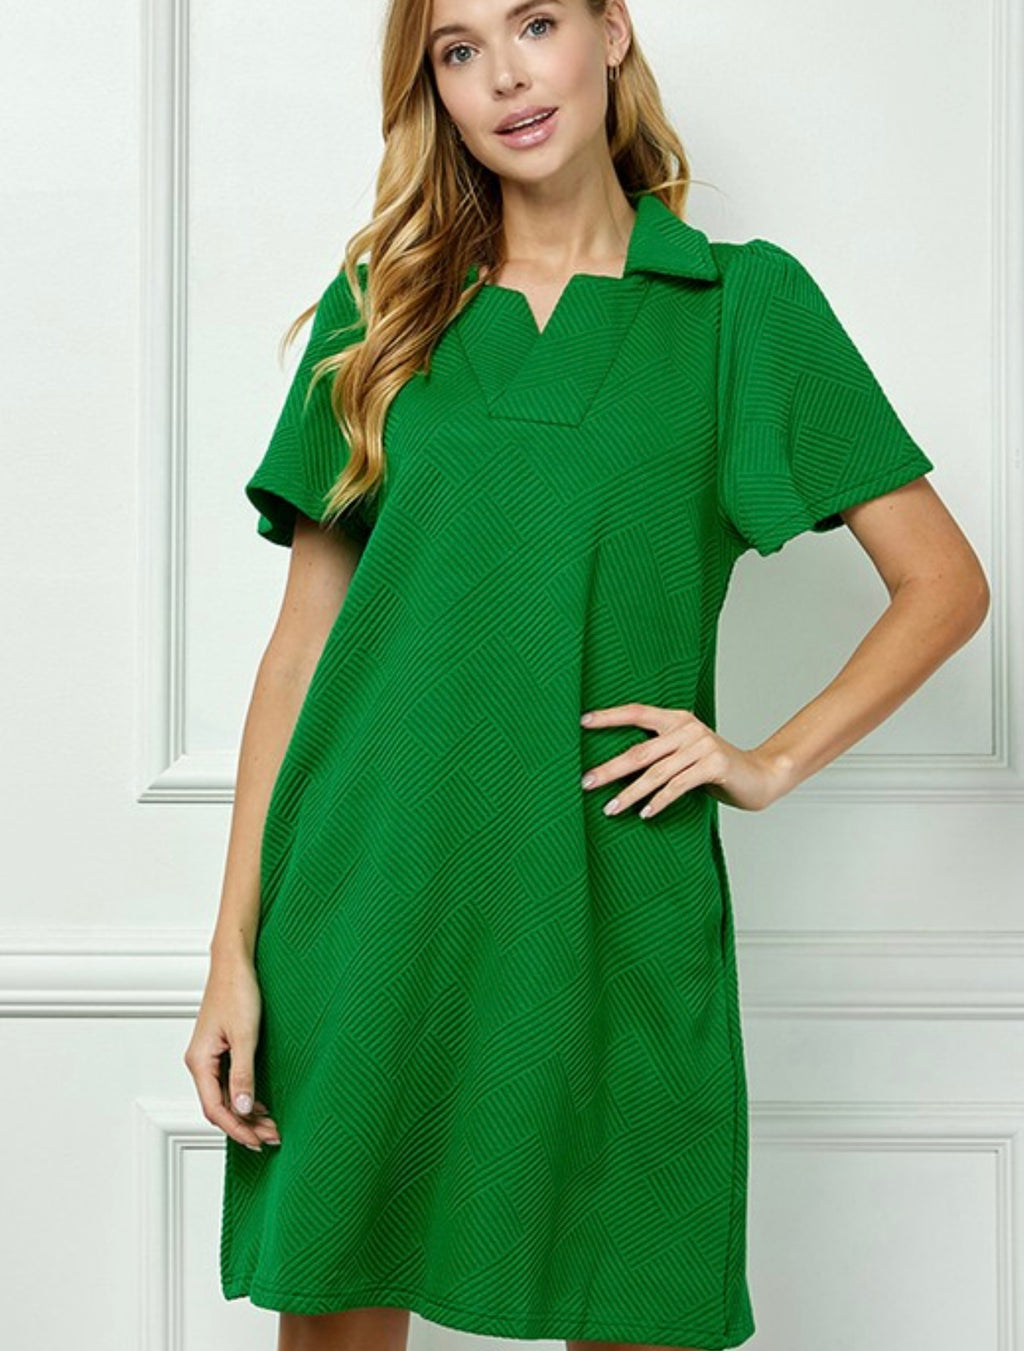 Green Collared Textured Dress